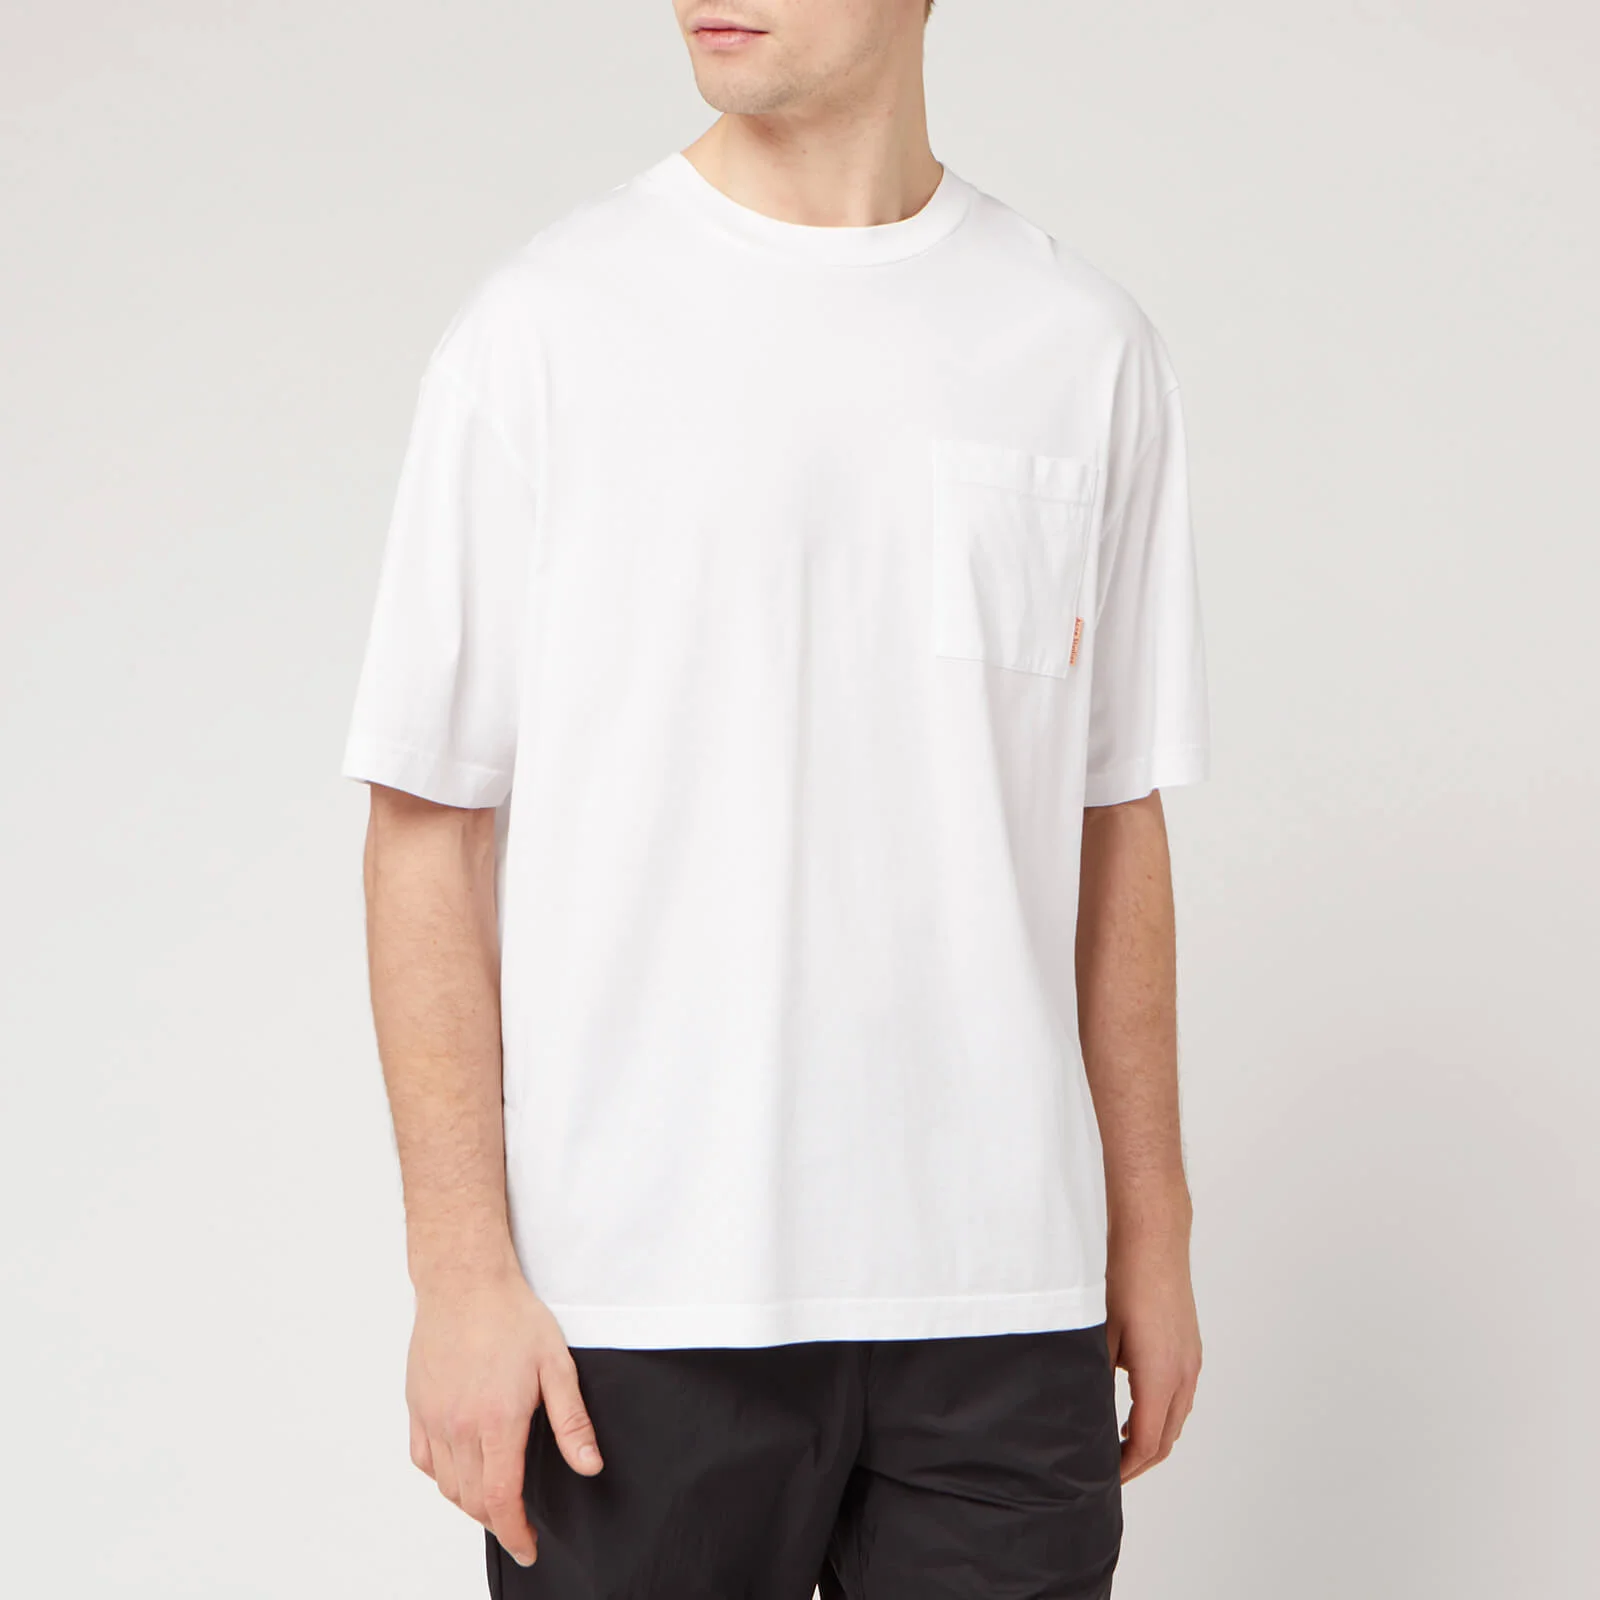 Acne Studios Men's Boxy Fit T-Shirt - Optic White Image 1